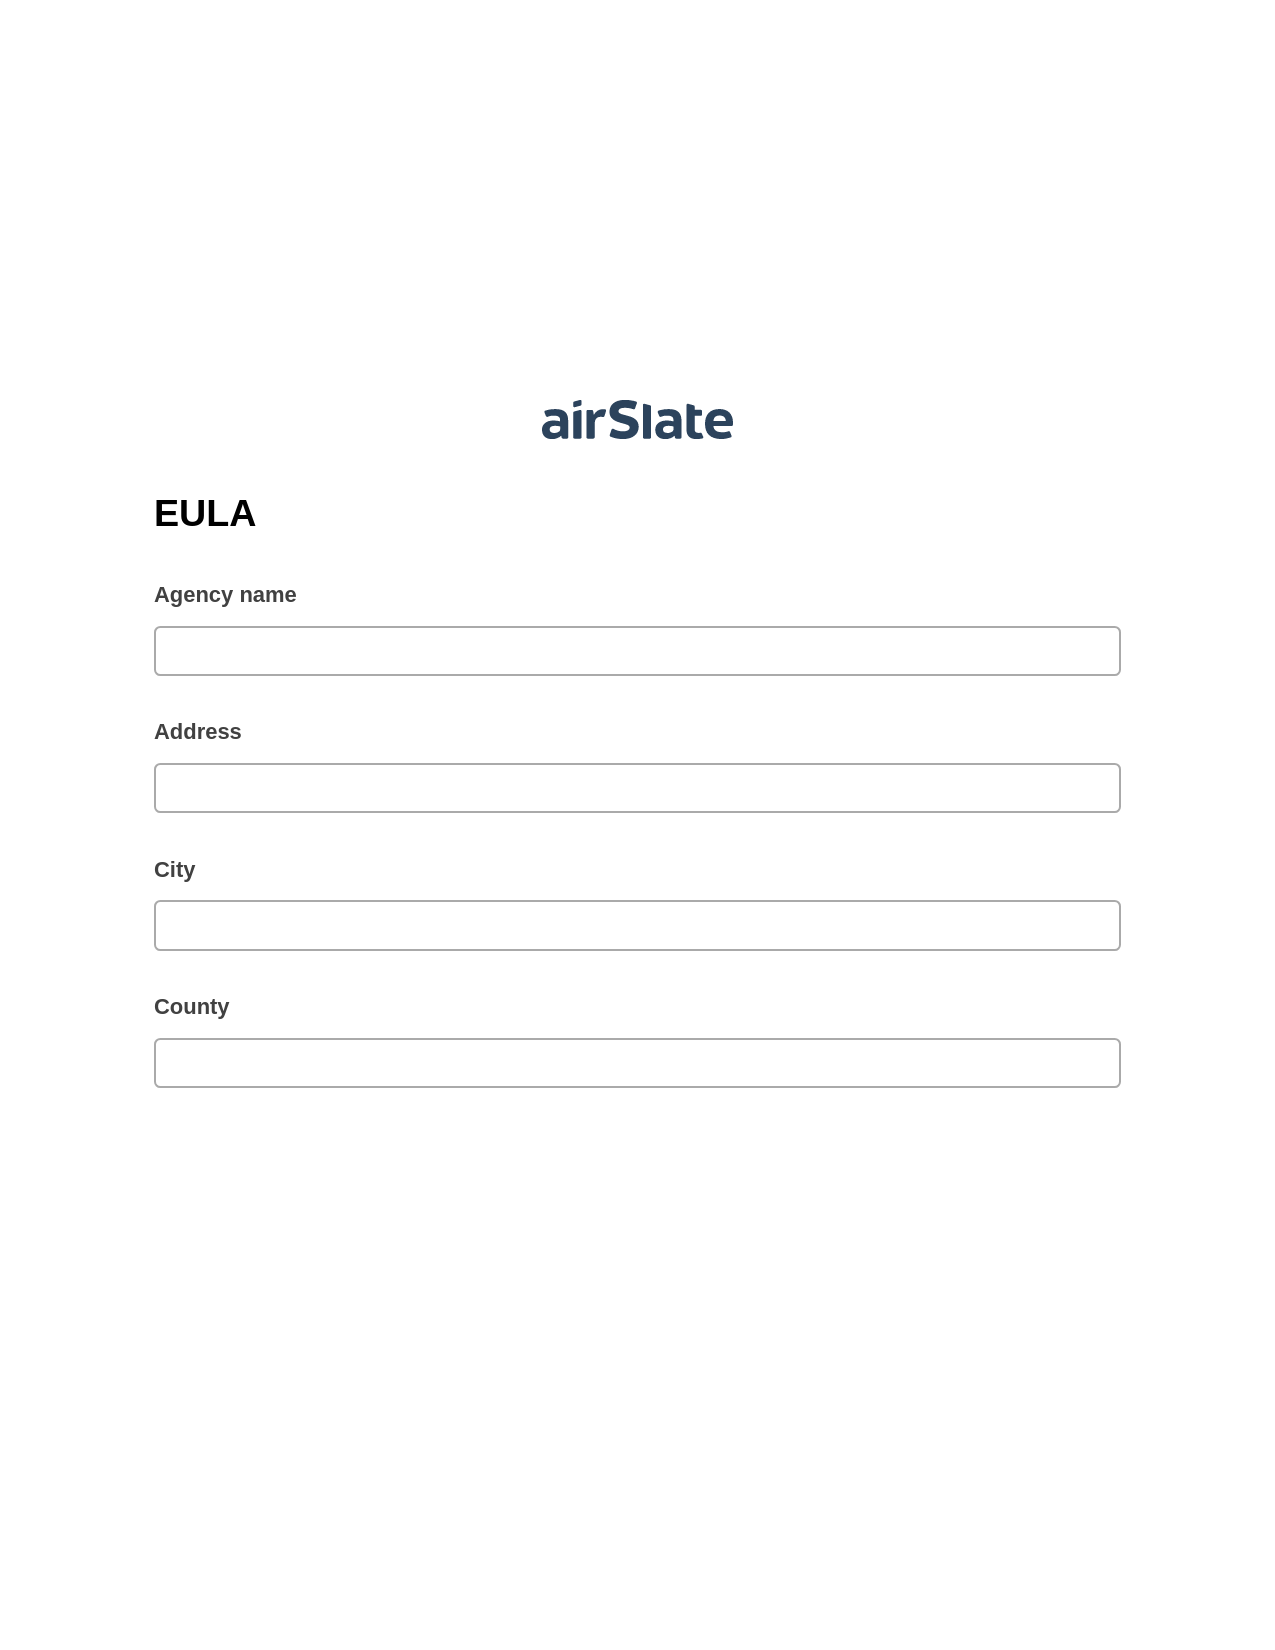 EULA Pre-fill from Google Sheet Dropdown Options Bot, Invoke Salesforce Process Bot, Slack Two-Way Binding Bot